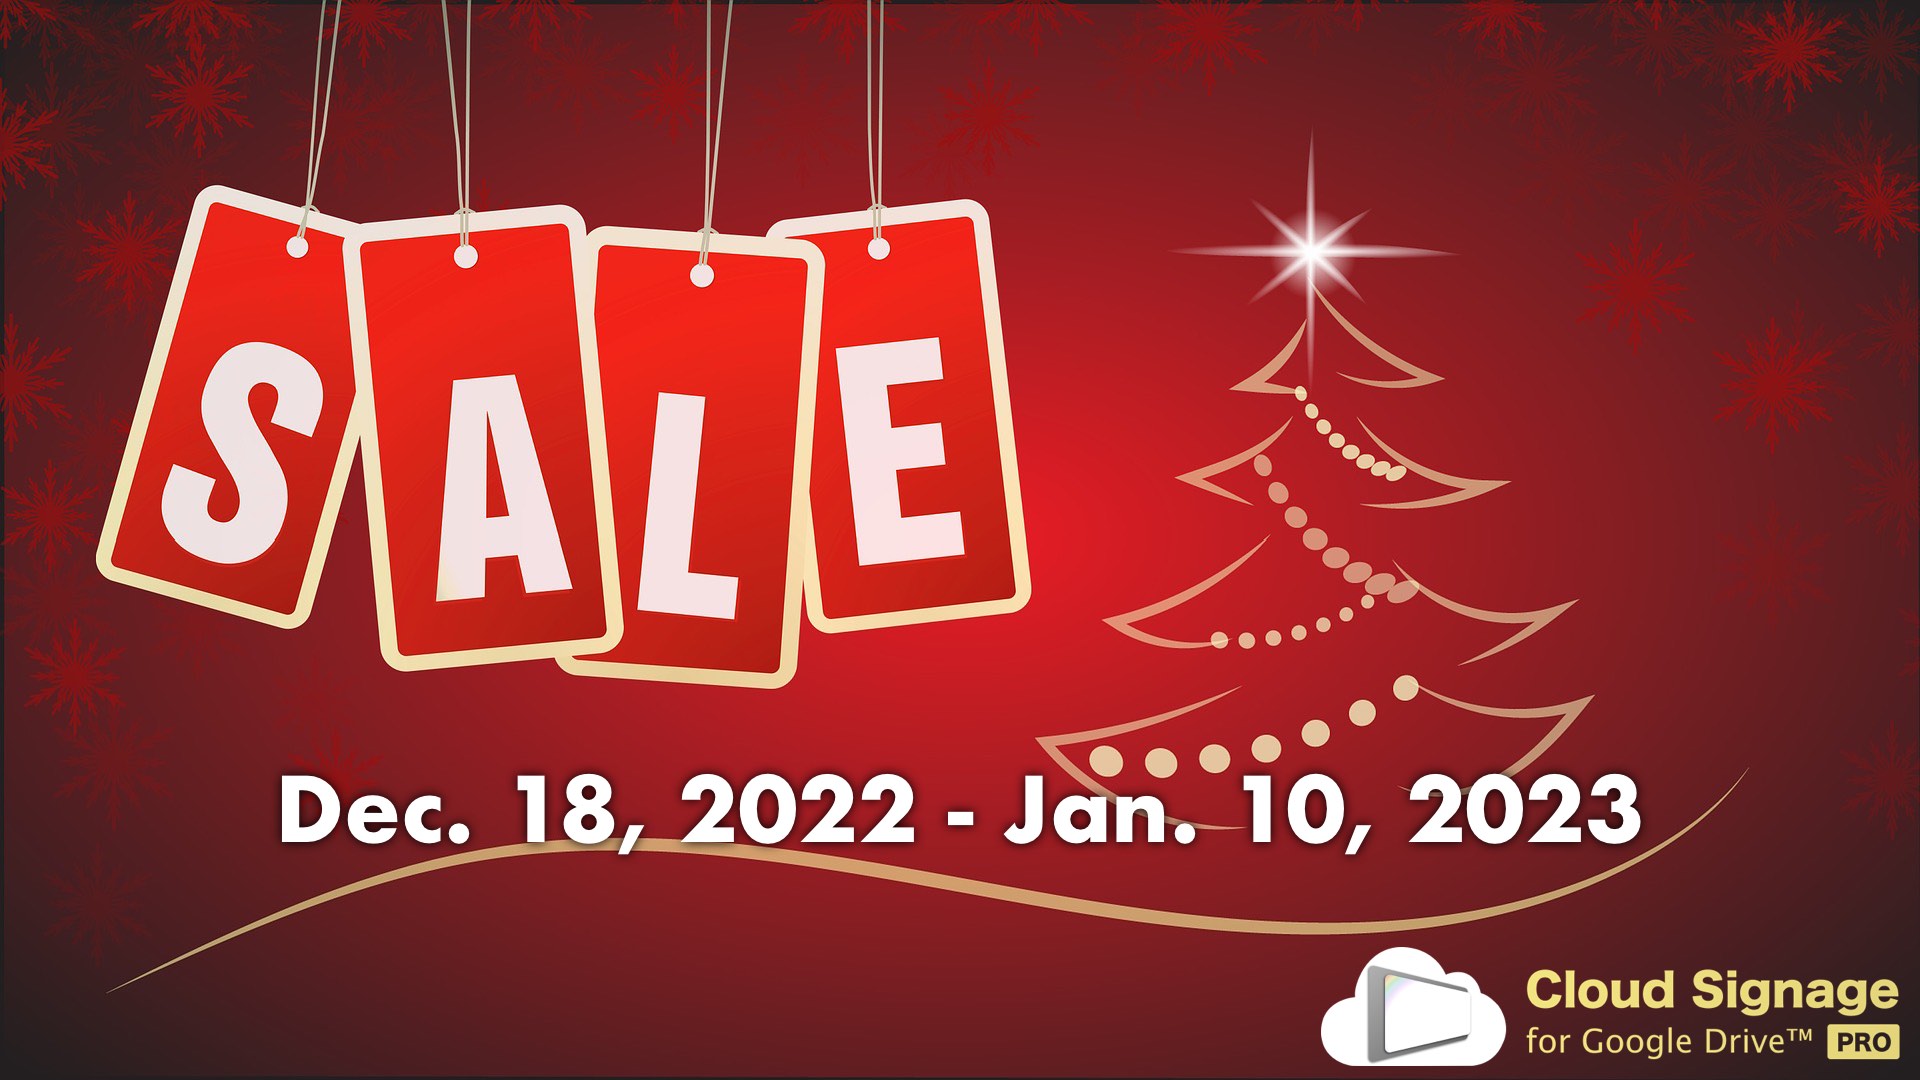 2022-2023 New Year holiday season sale